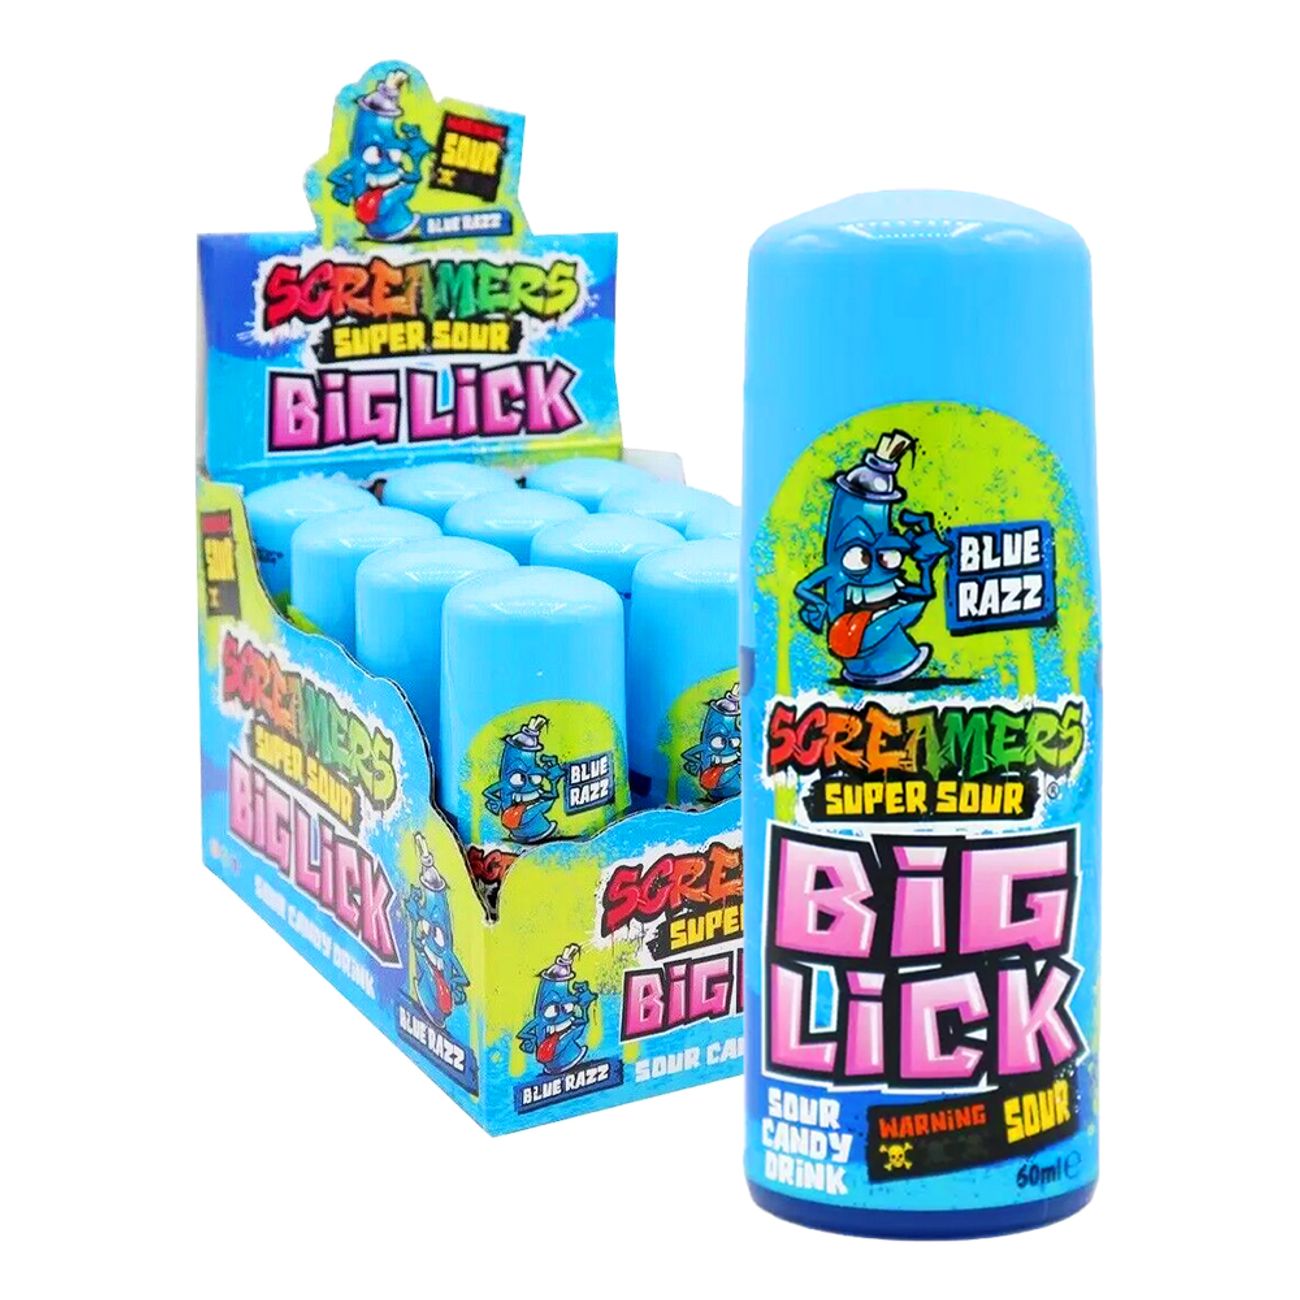 screamers-big-lick-storpack-101305-3